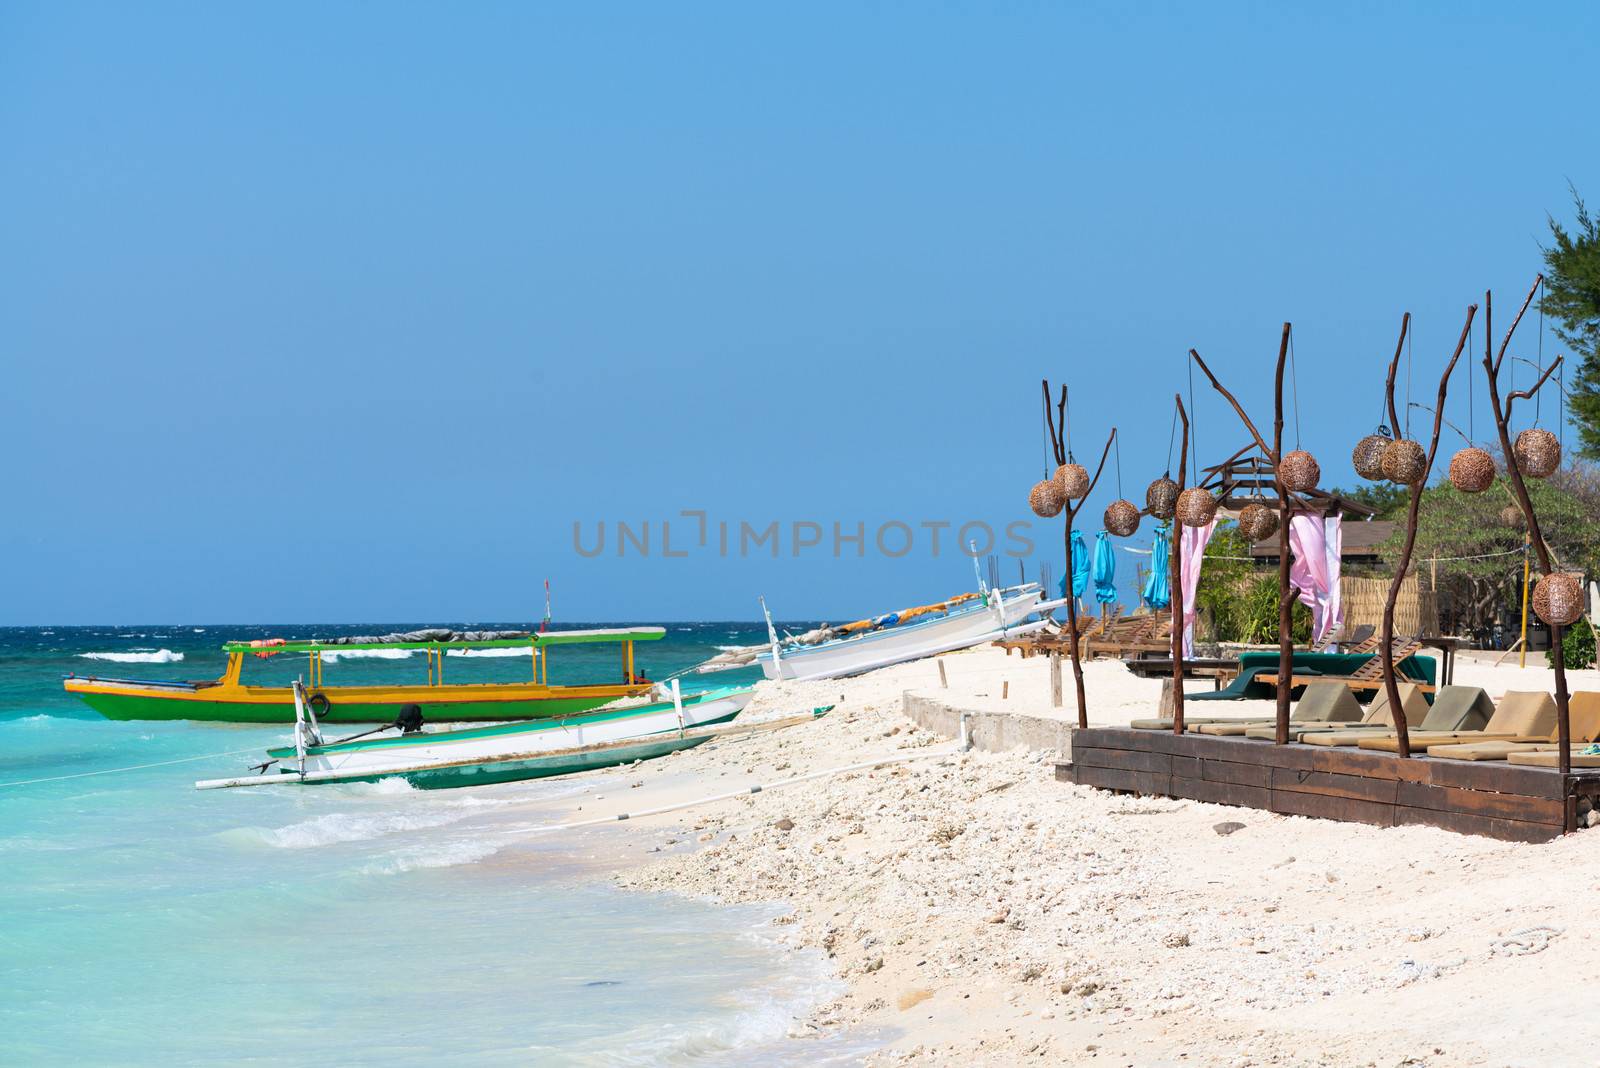 Small wooden long boats on blue sea by iryna_rasko